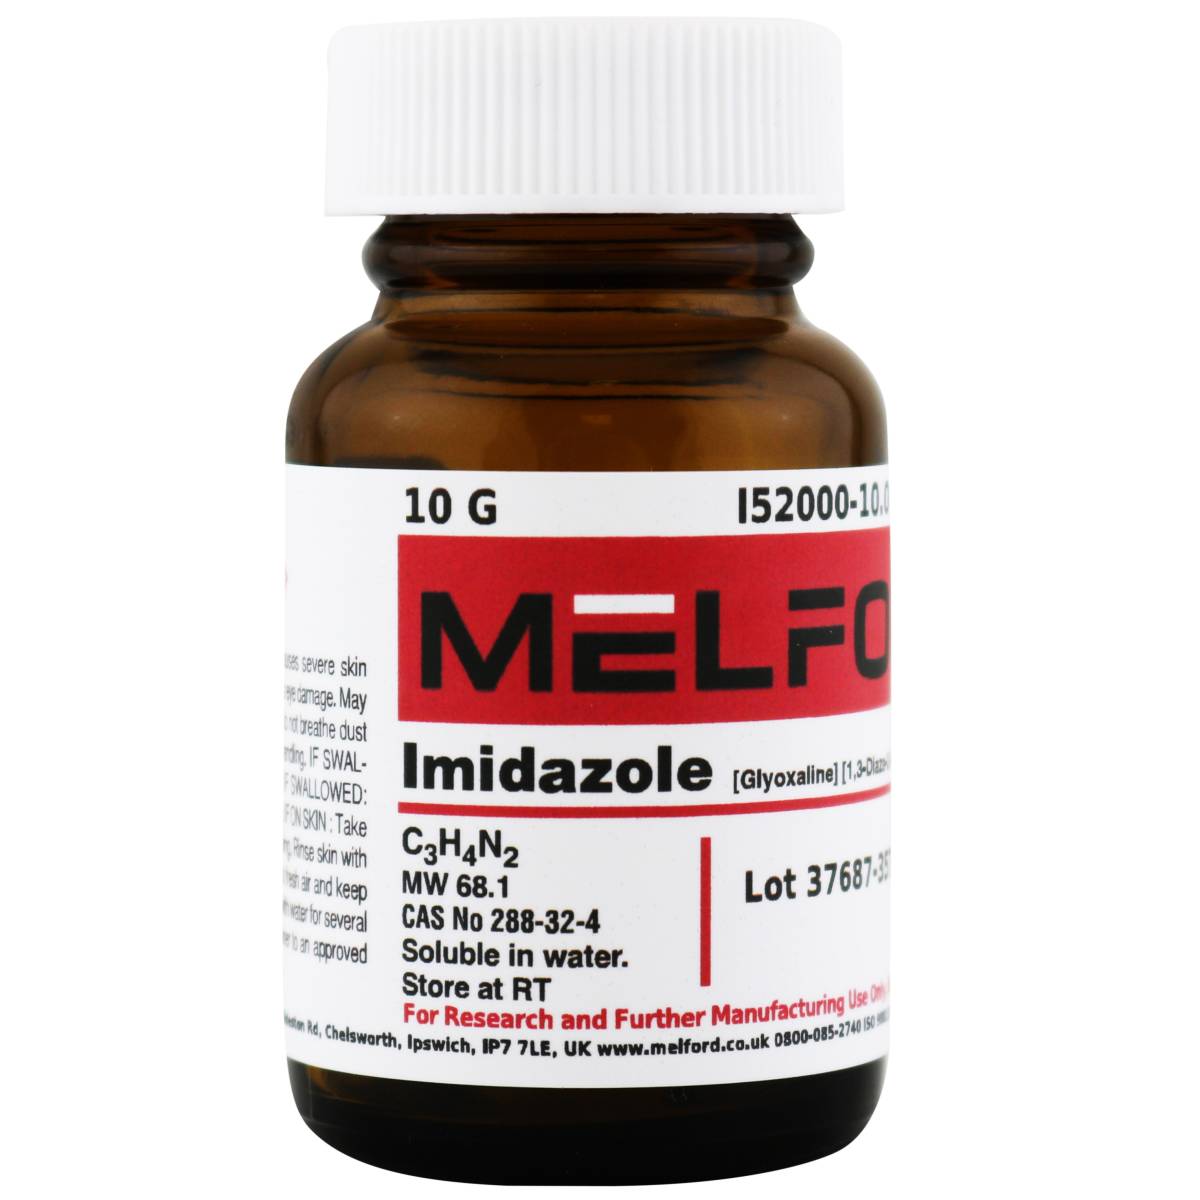 Imidazole [Glyoxaline] [1,3-Diaza-2-,4-cyclopentadiene], 10 Grams